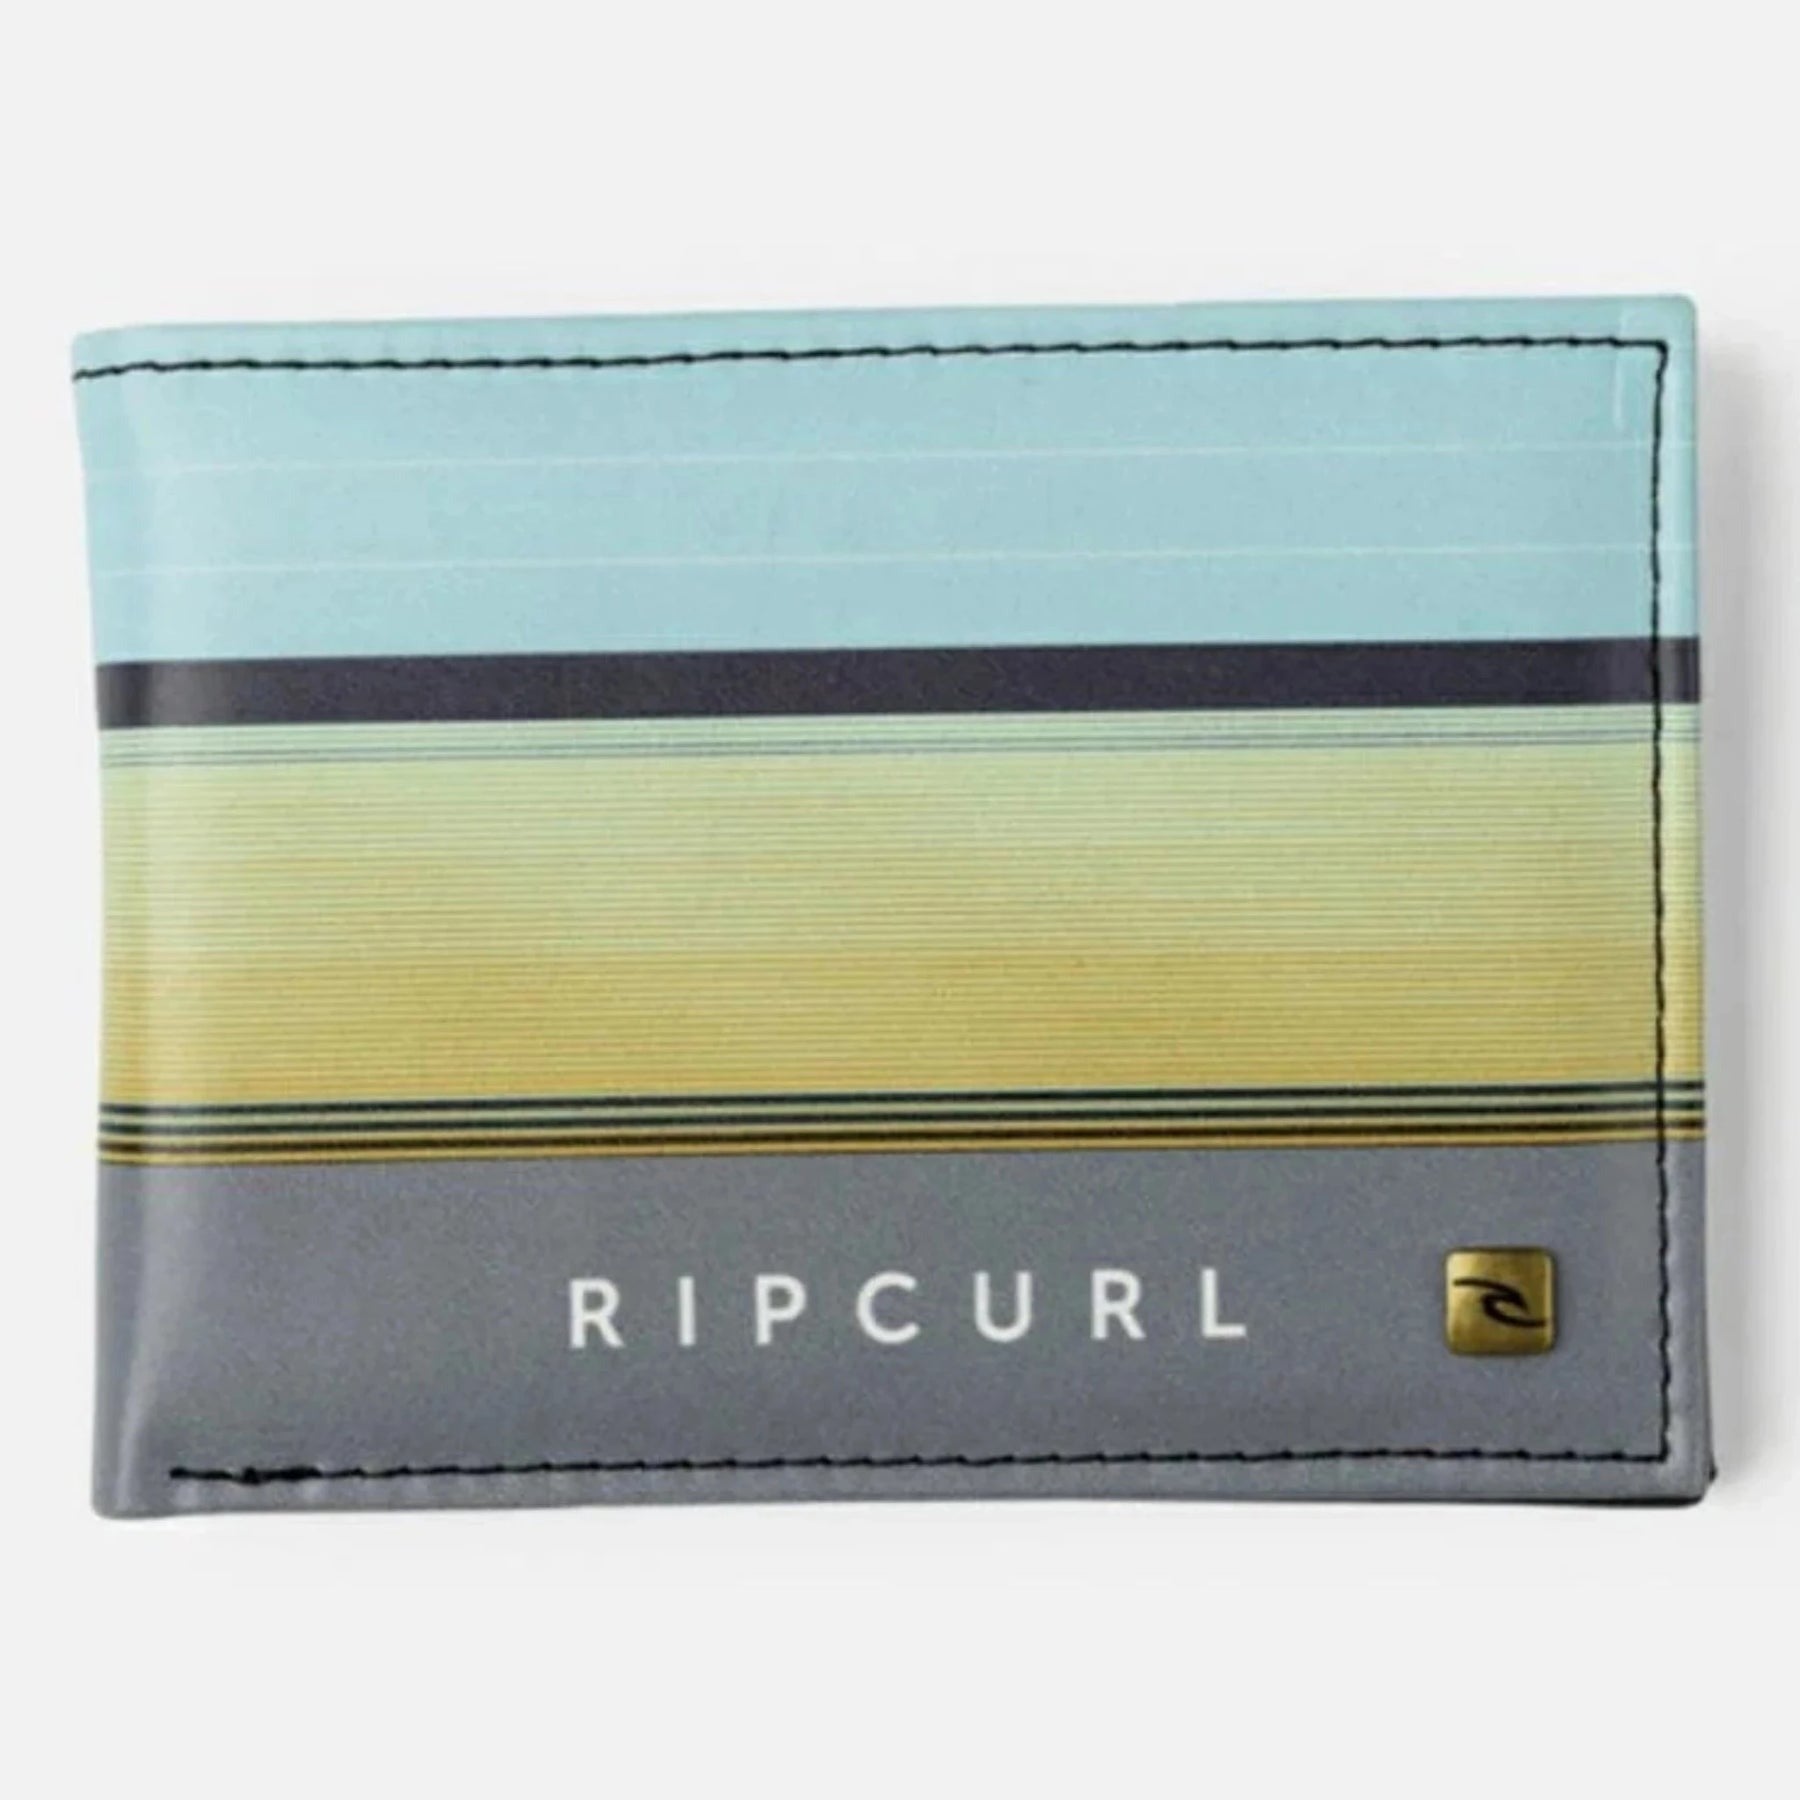 Ripcurl Combo PU Slim Wallet Black Green Multi